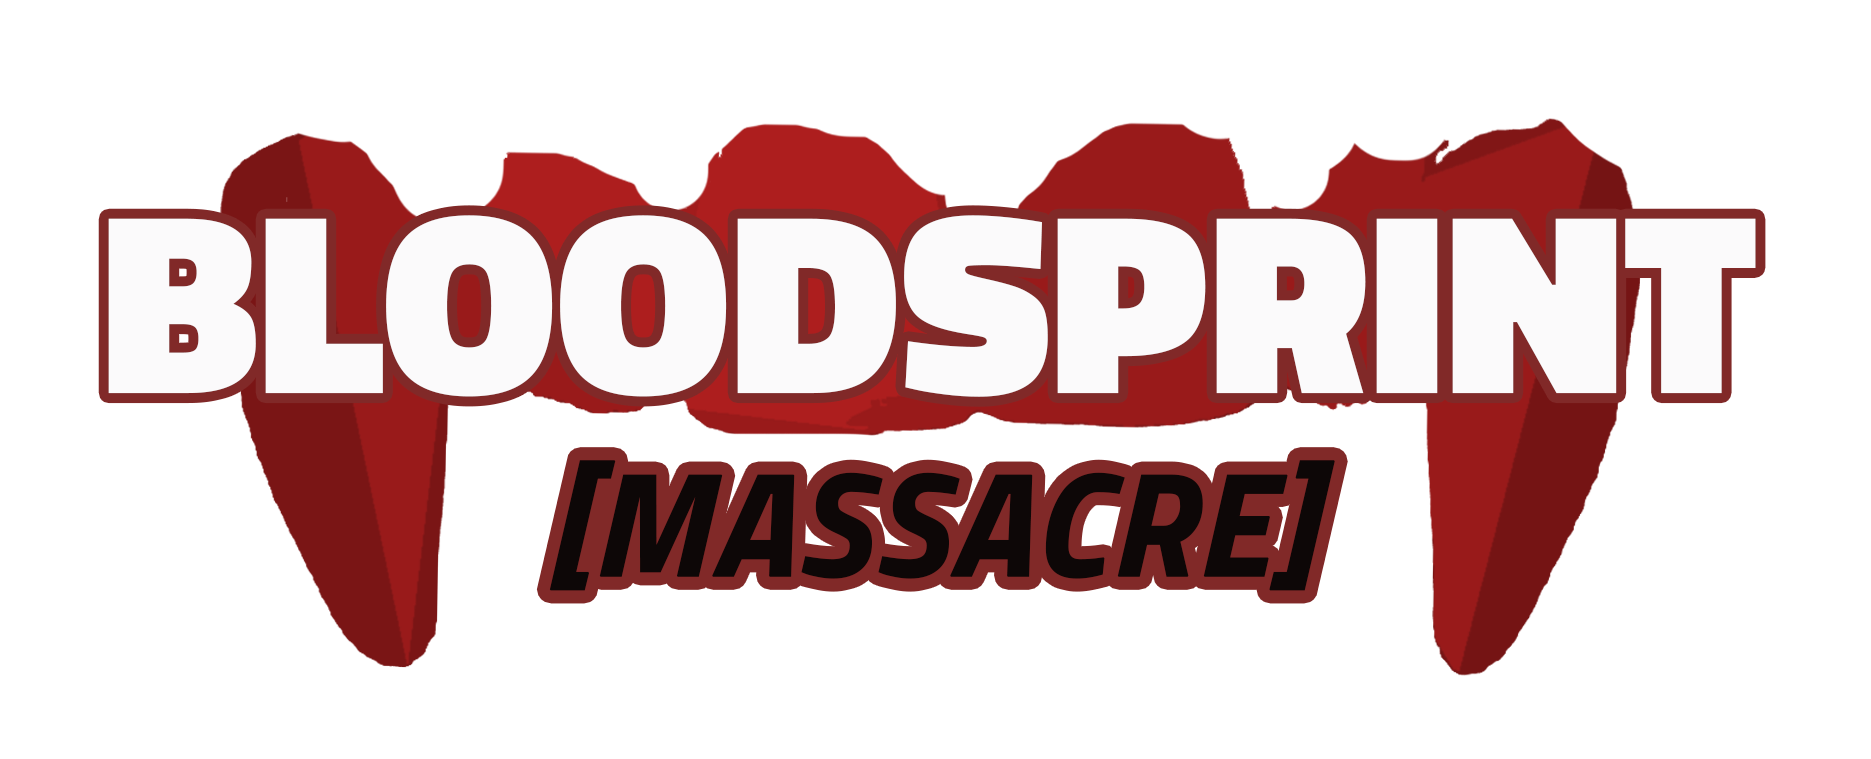 Bloodsprint: Massacre